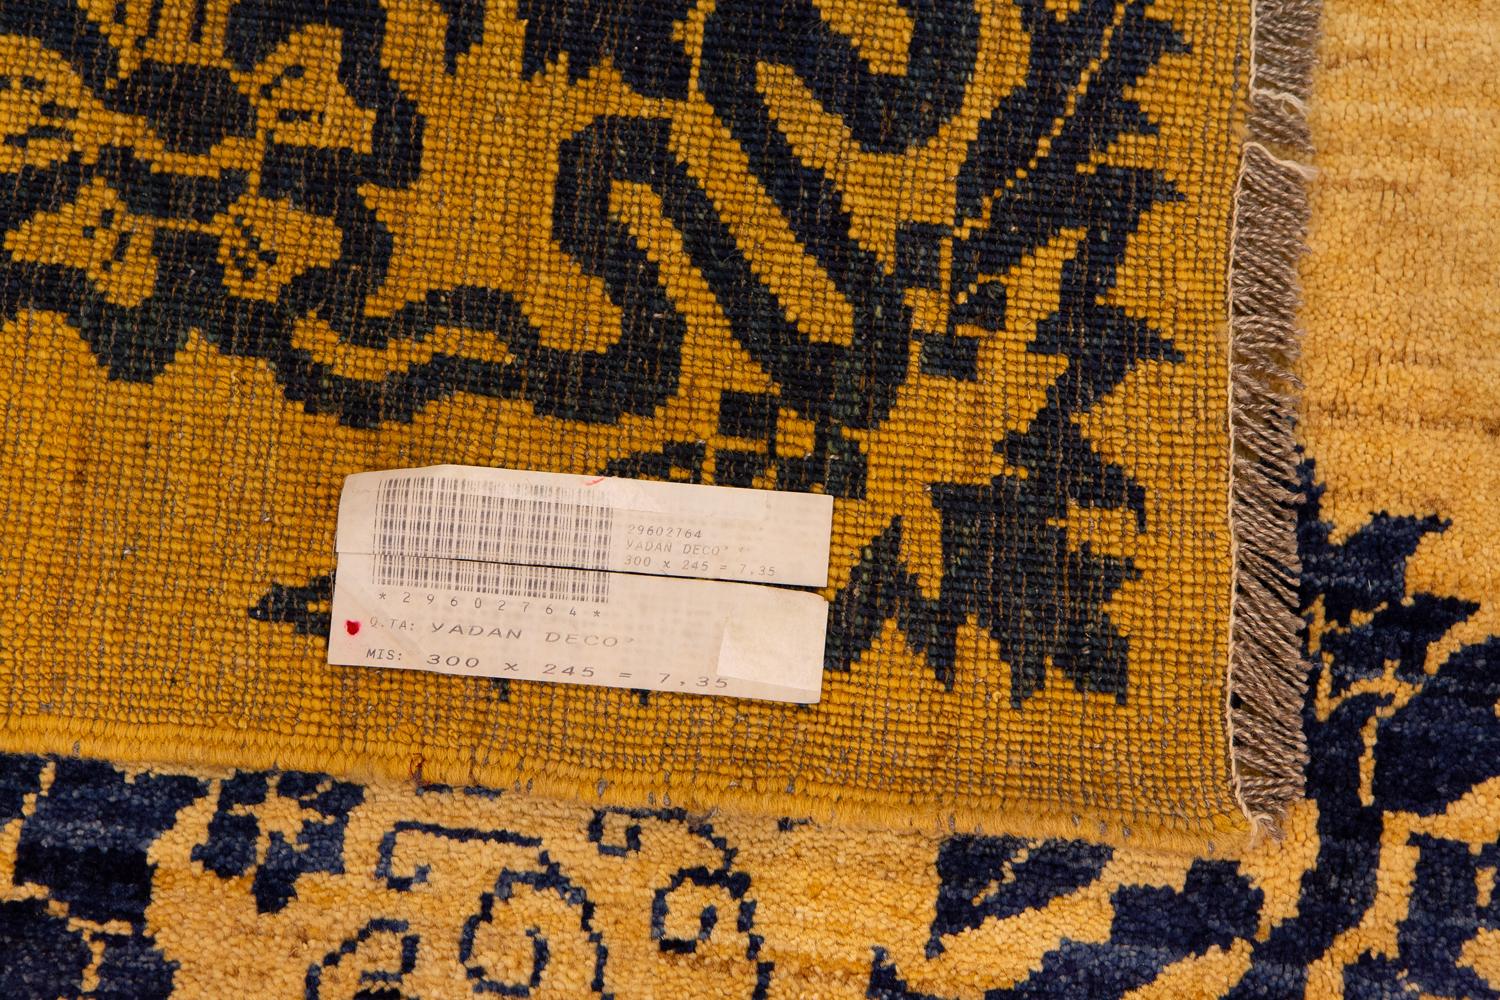 Modern Carpet Golden-Color Field Yadan Deco’ Hand-Knotted Carpet For Sale 3